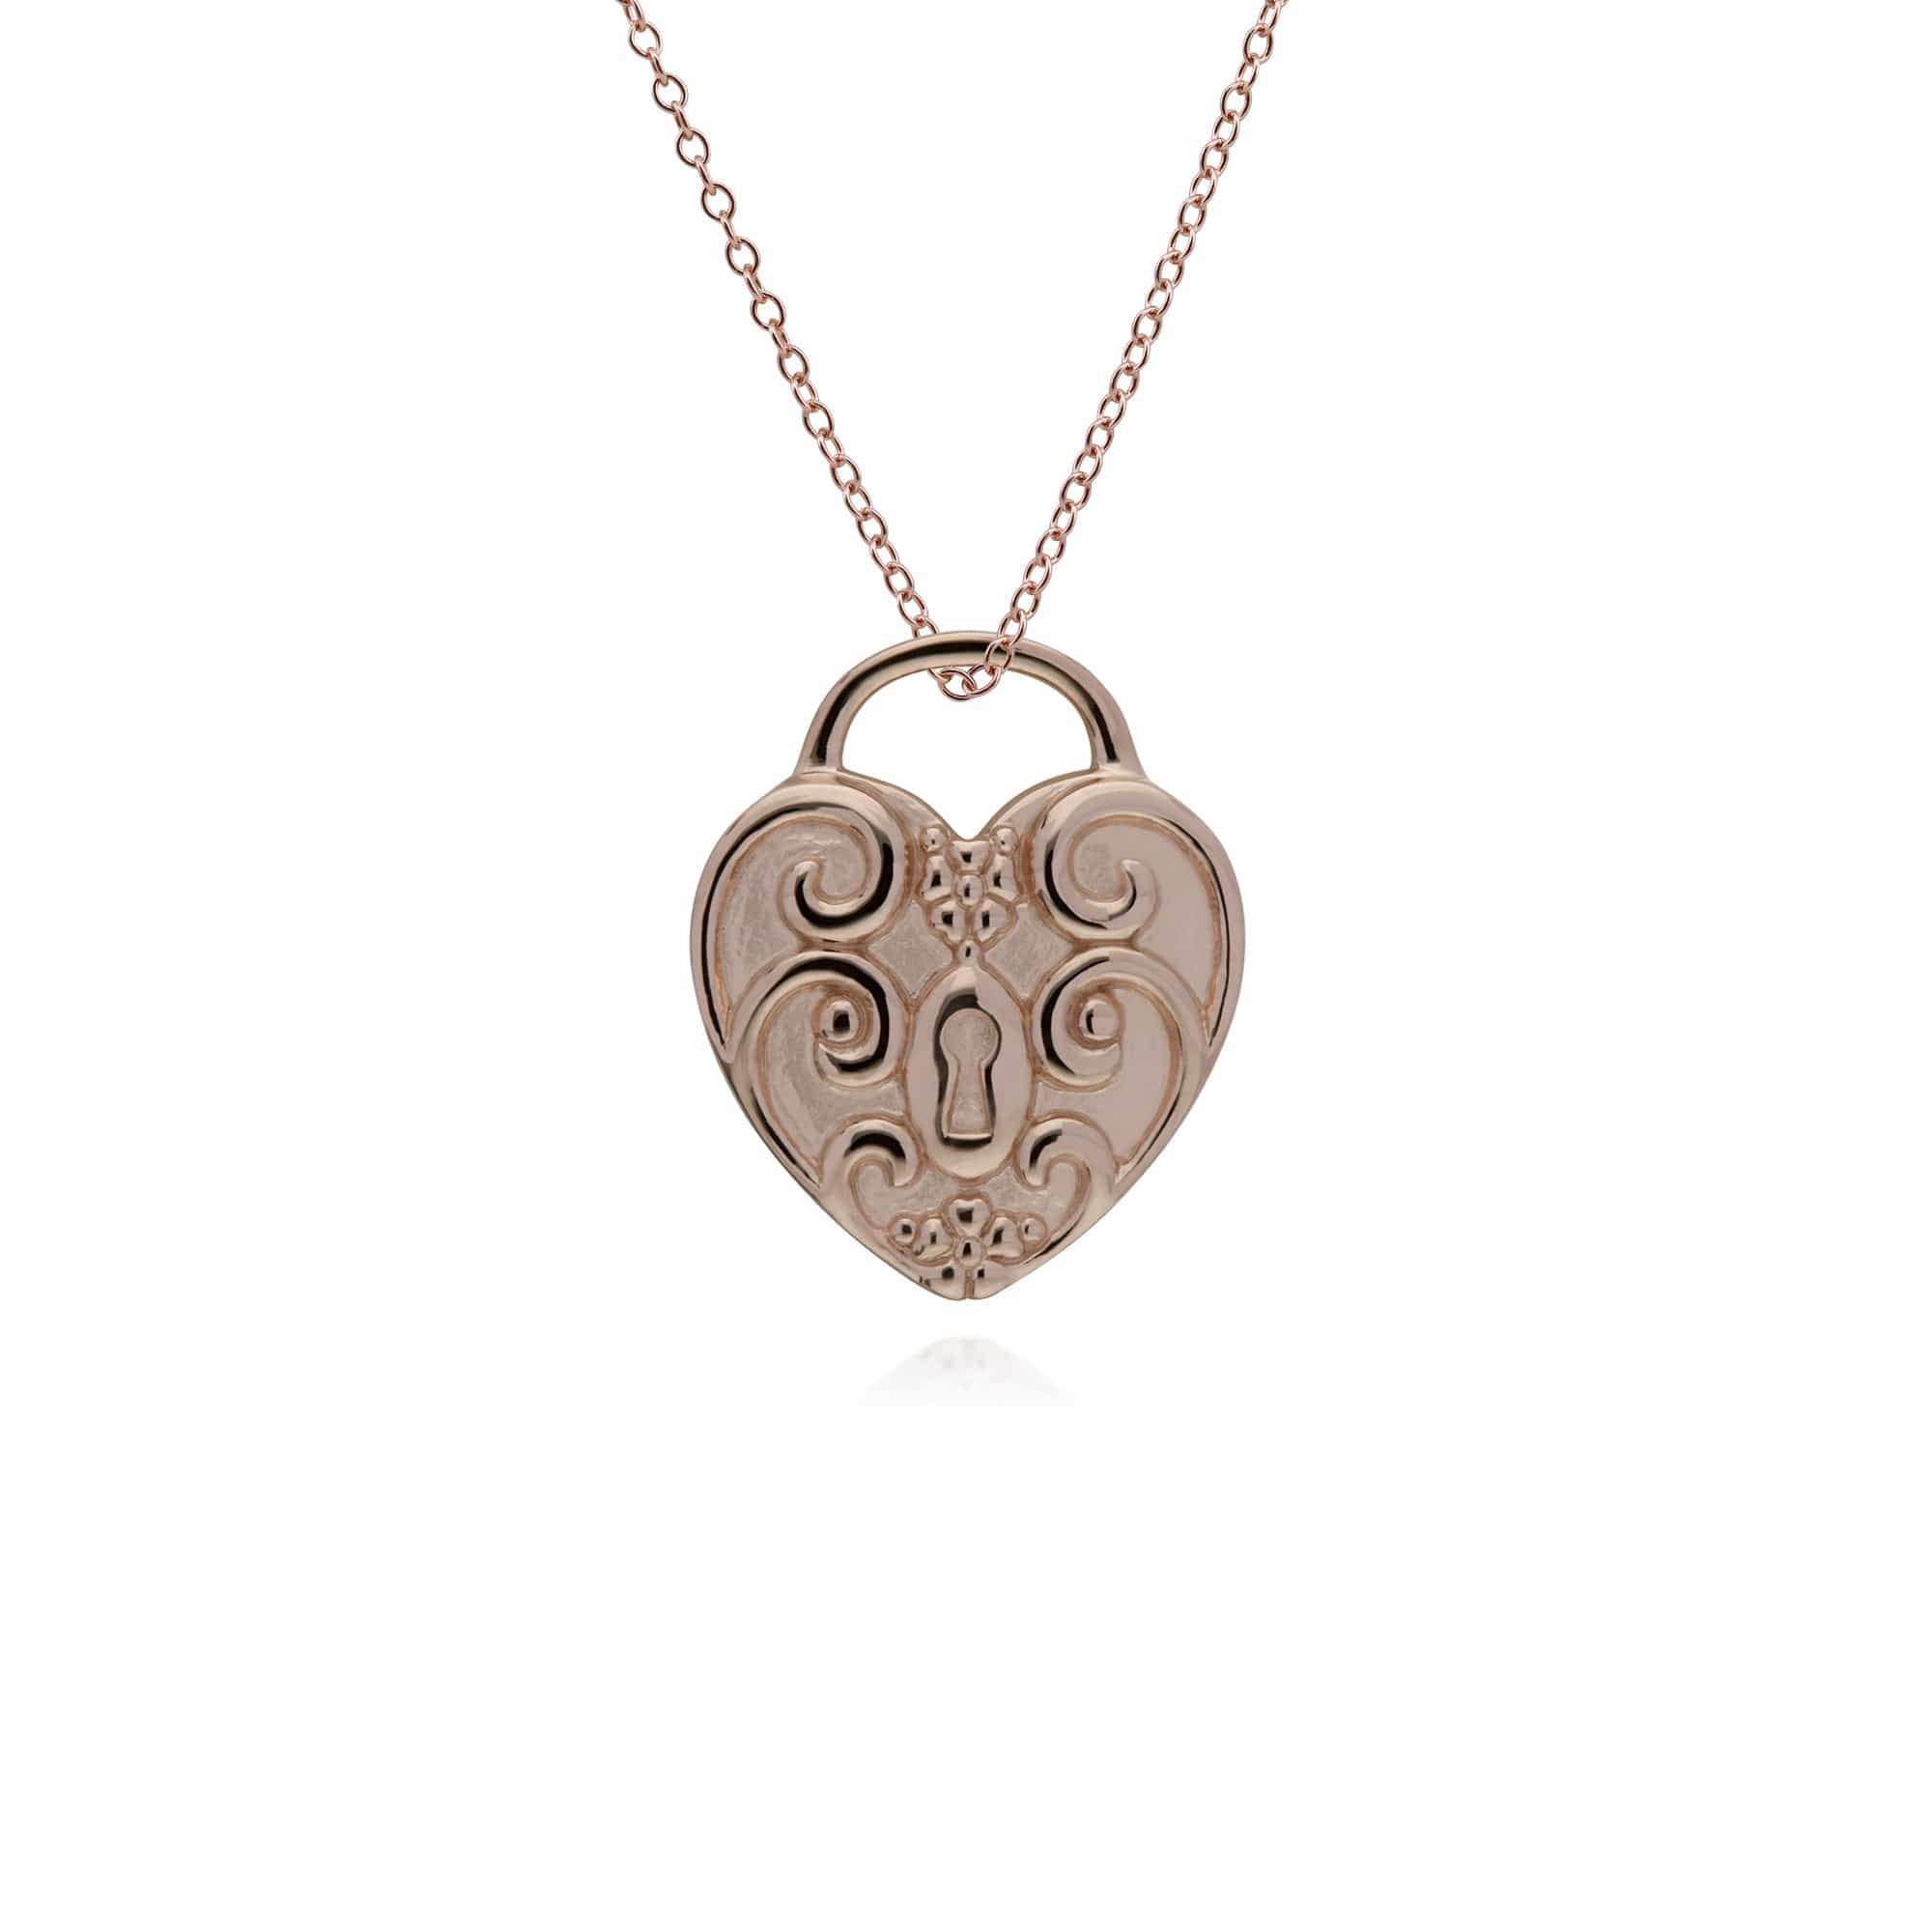 270P026707925-270P026501925 Classic Swirl Heart Lock Pendant & Garnet Big Key Charm in Rose Gold Plated 925 Sterling Silver 3